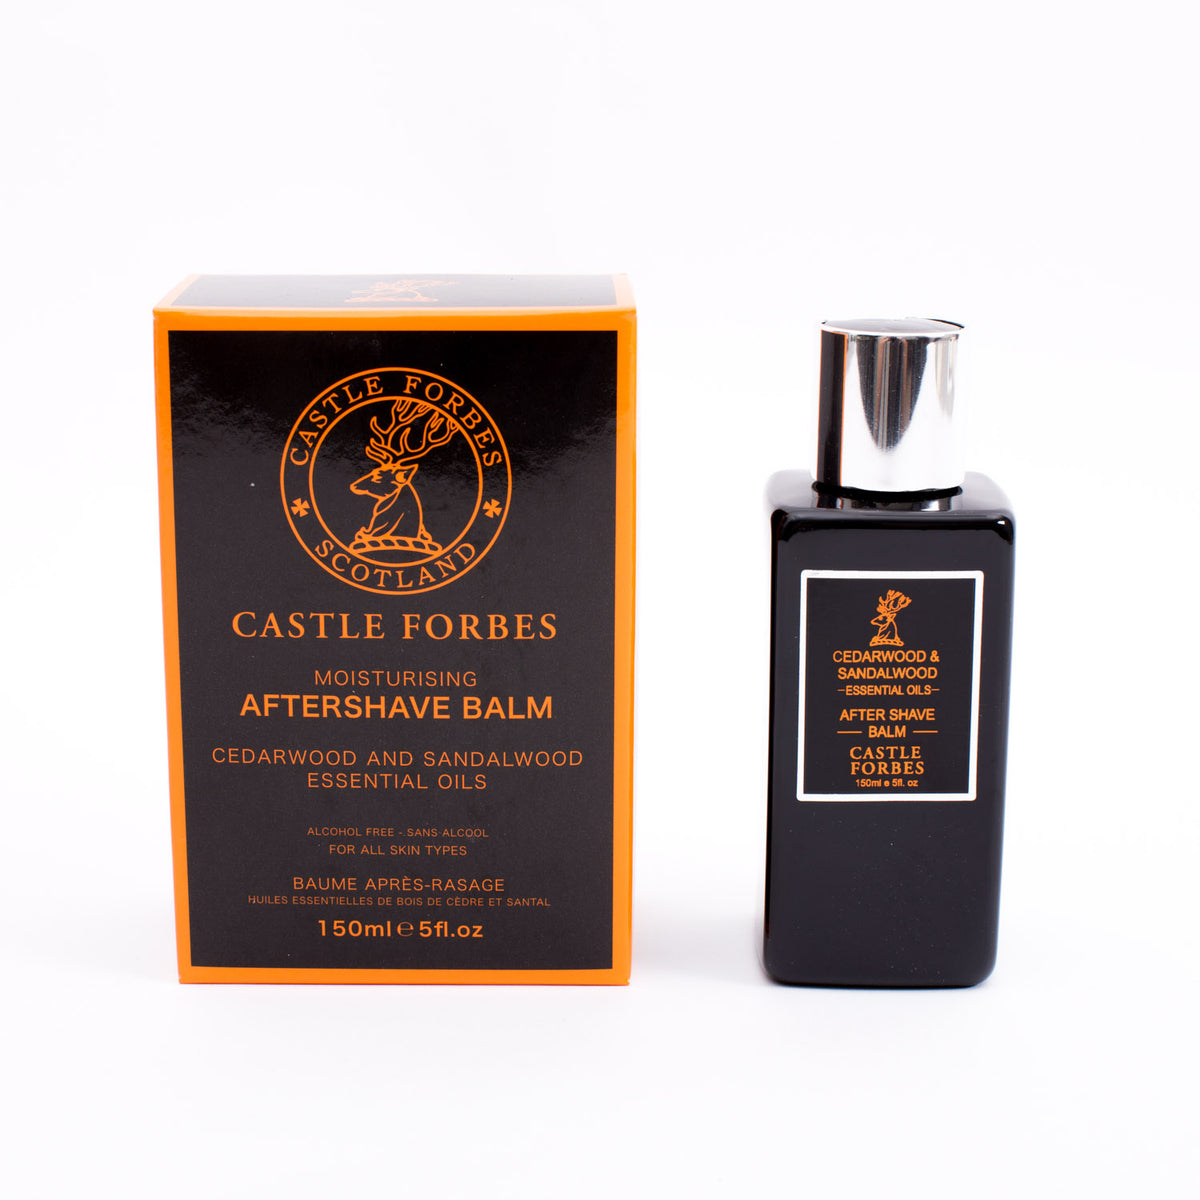 Castle Forbes Cedarwood and Sandalwood Oil Aftershave Balm